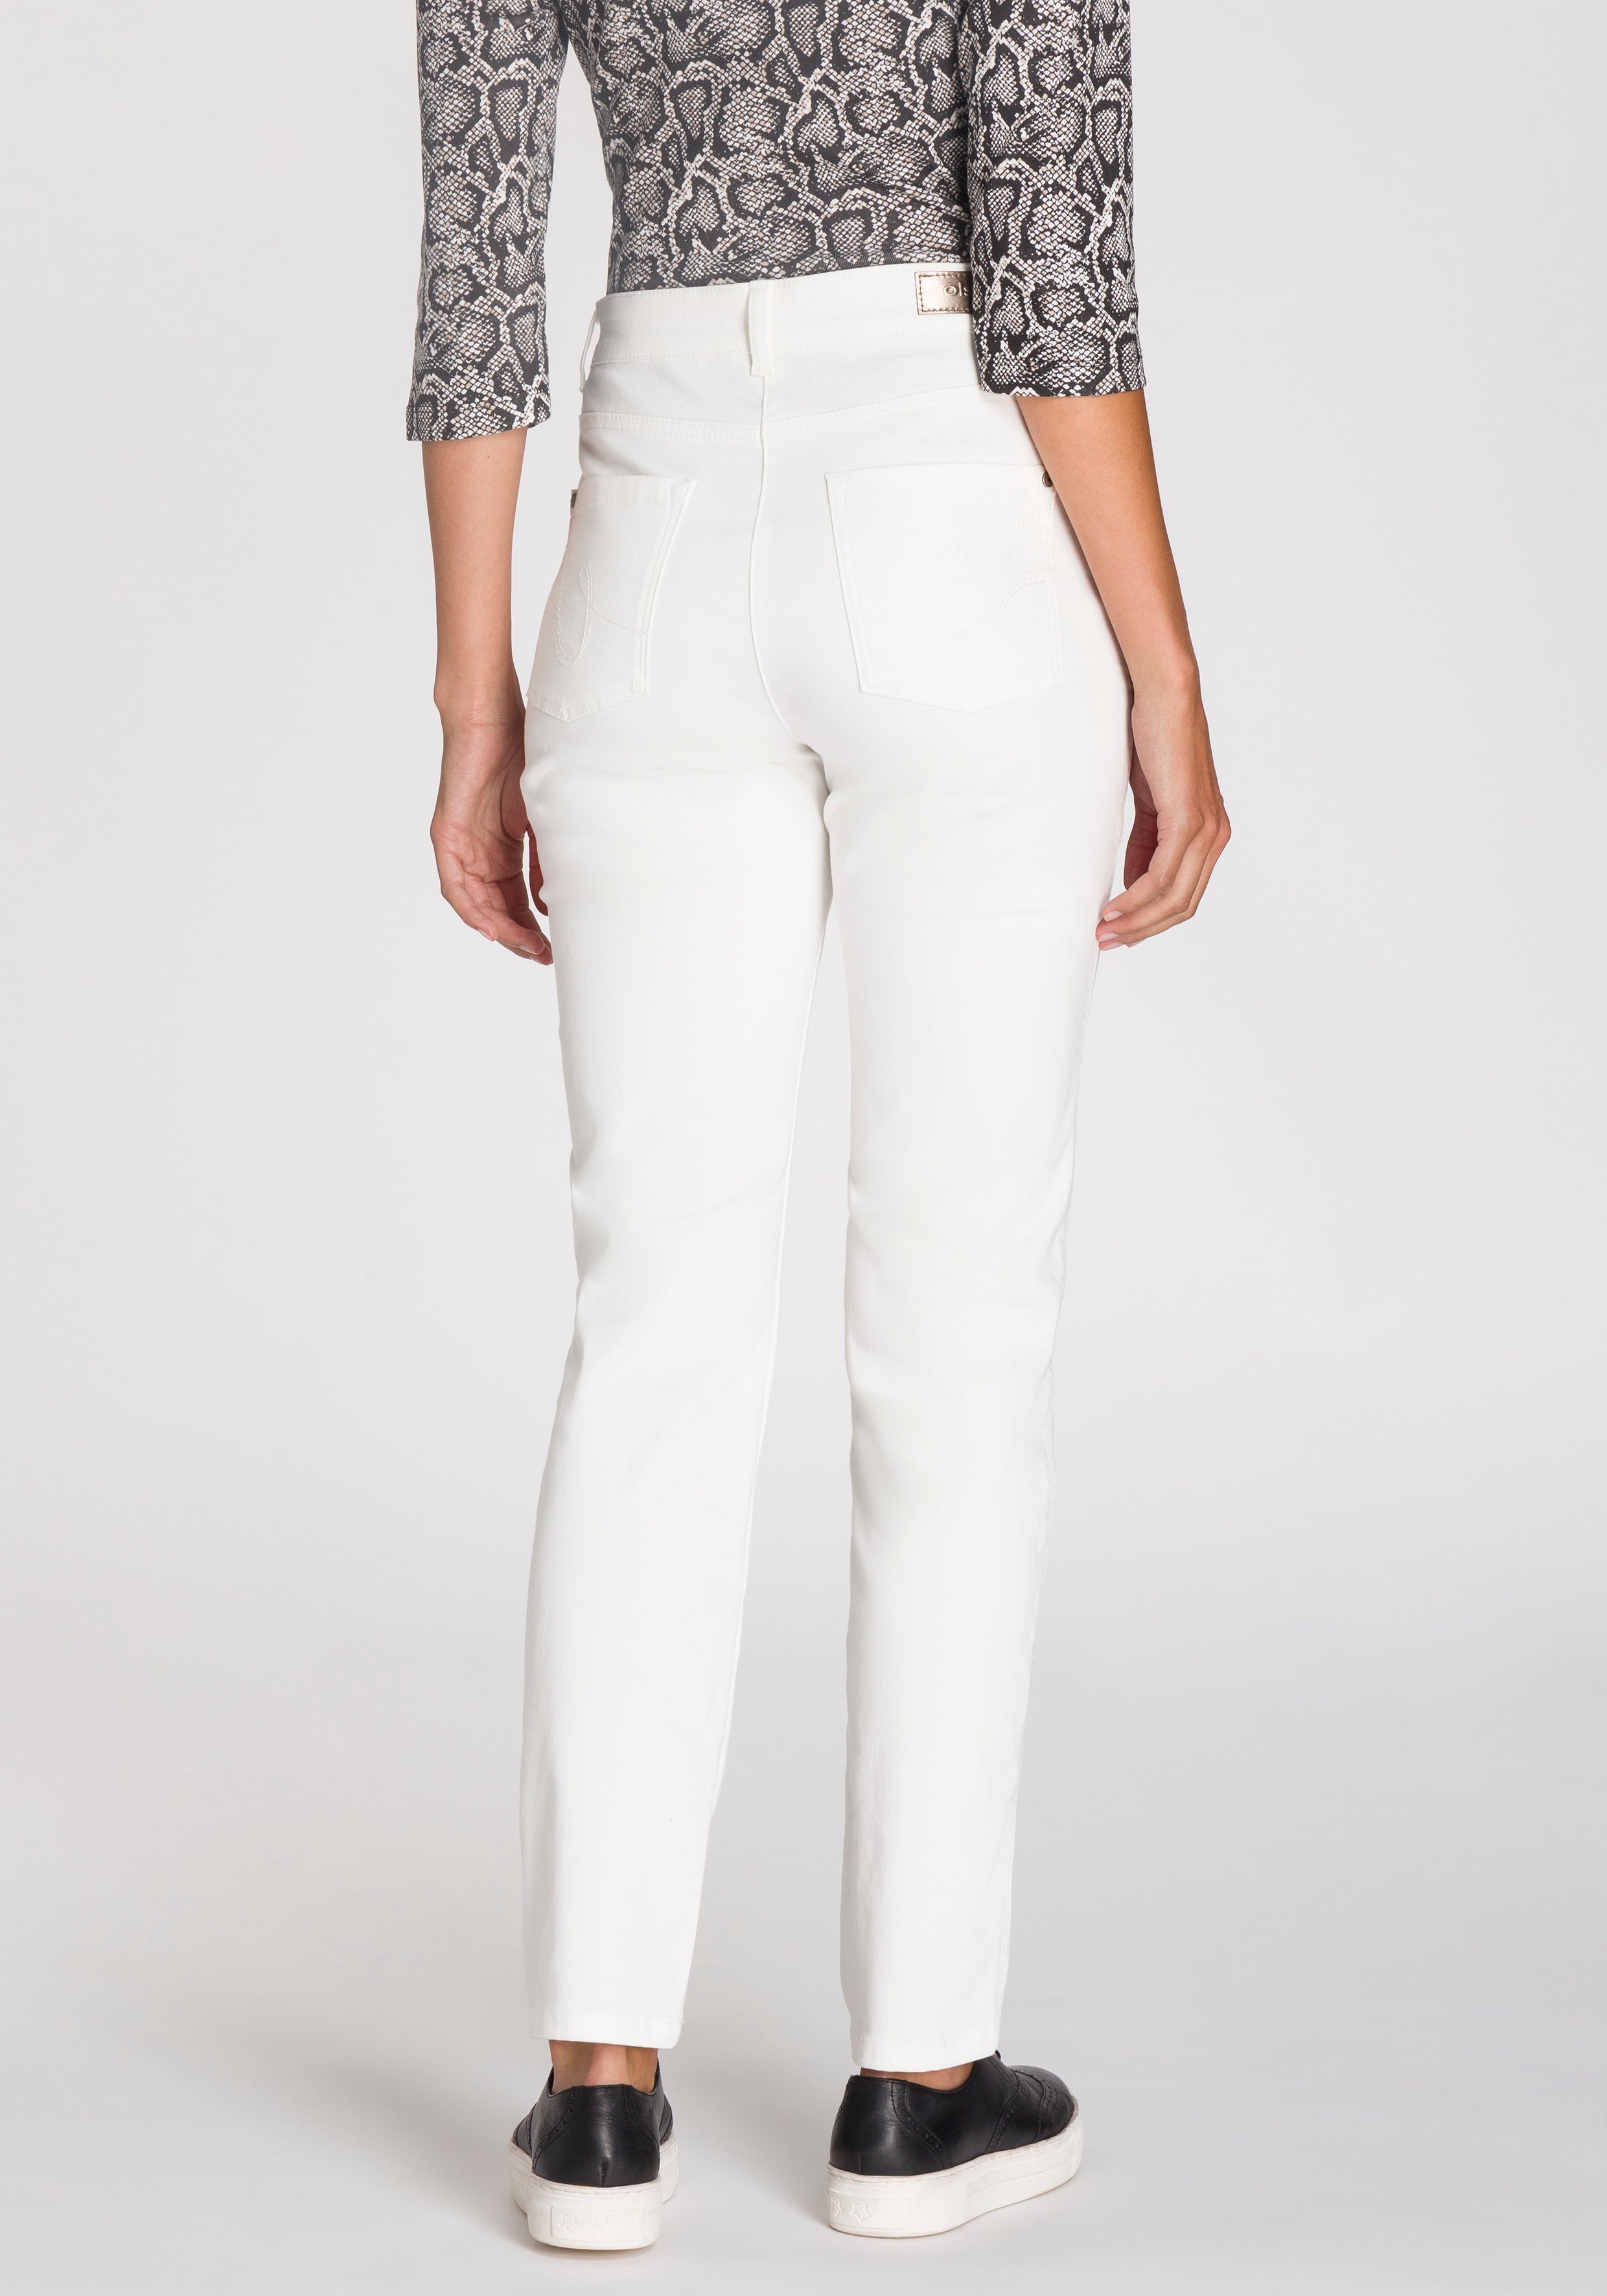 Slim Fit Jean in Off White